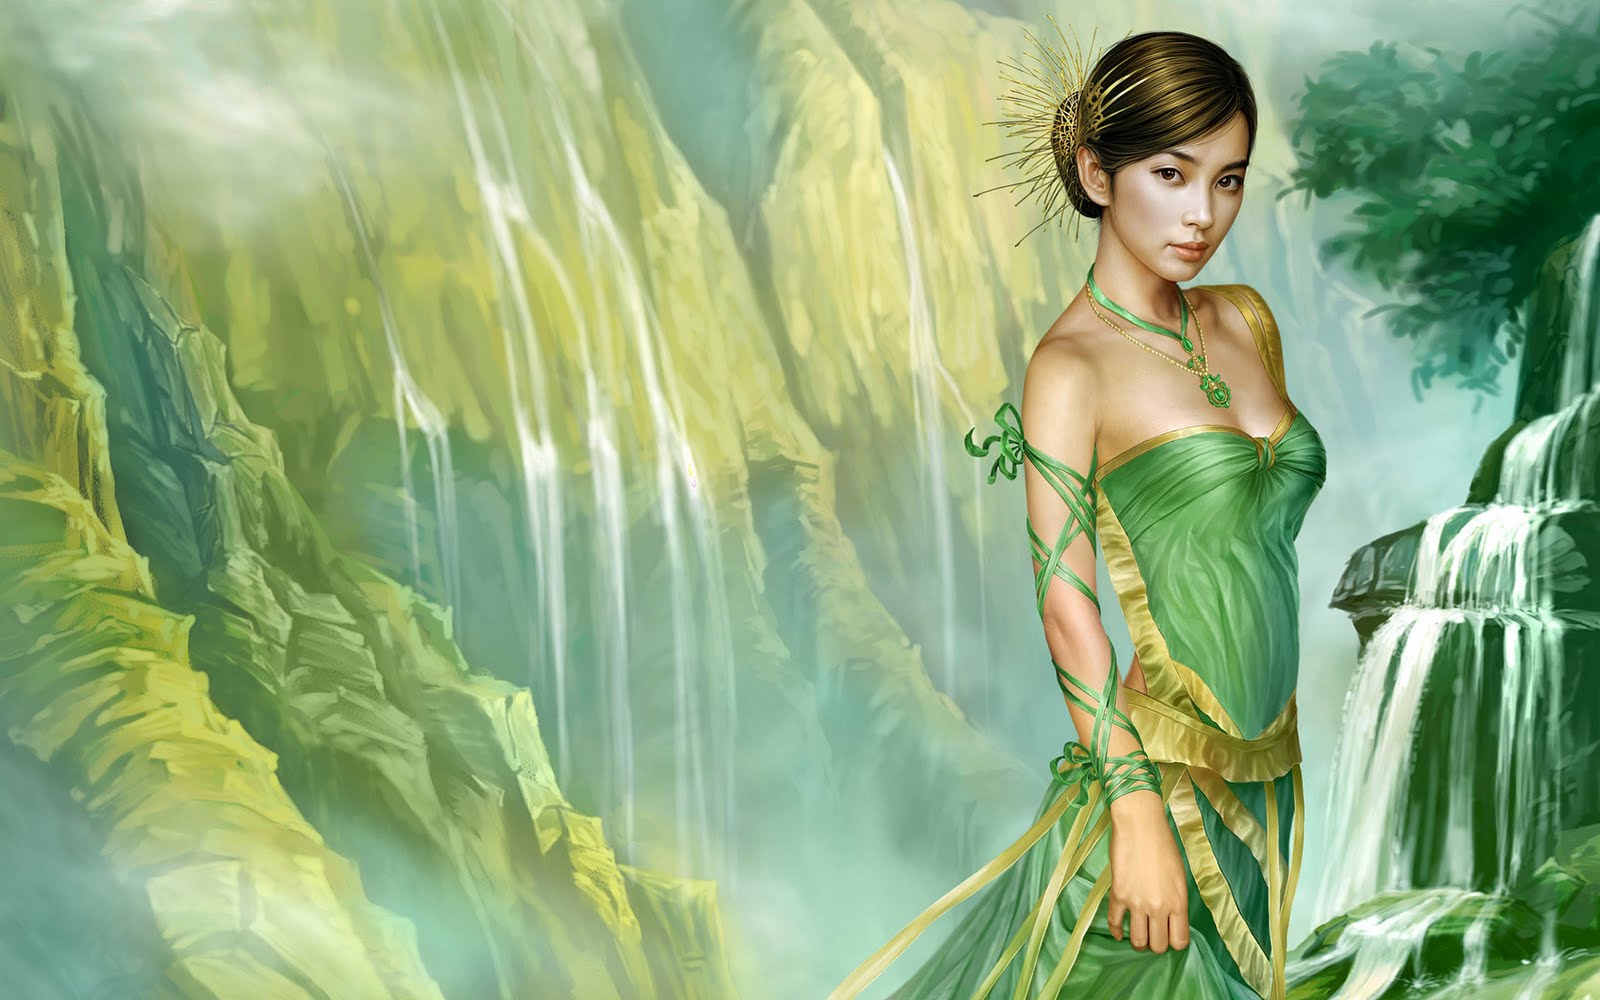 fantasy women wallpaper,people in nature,cg artwork,mythology,illustration,fictional character